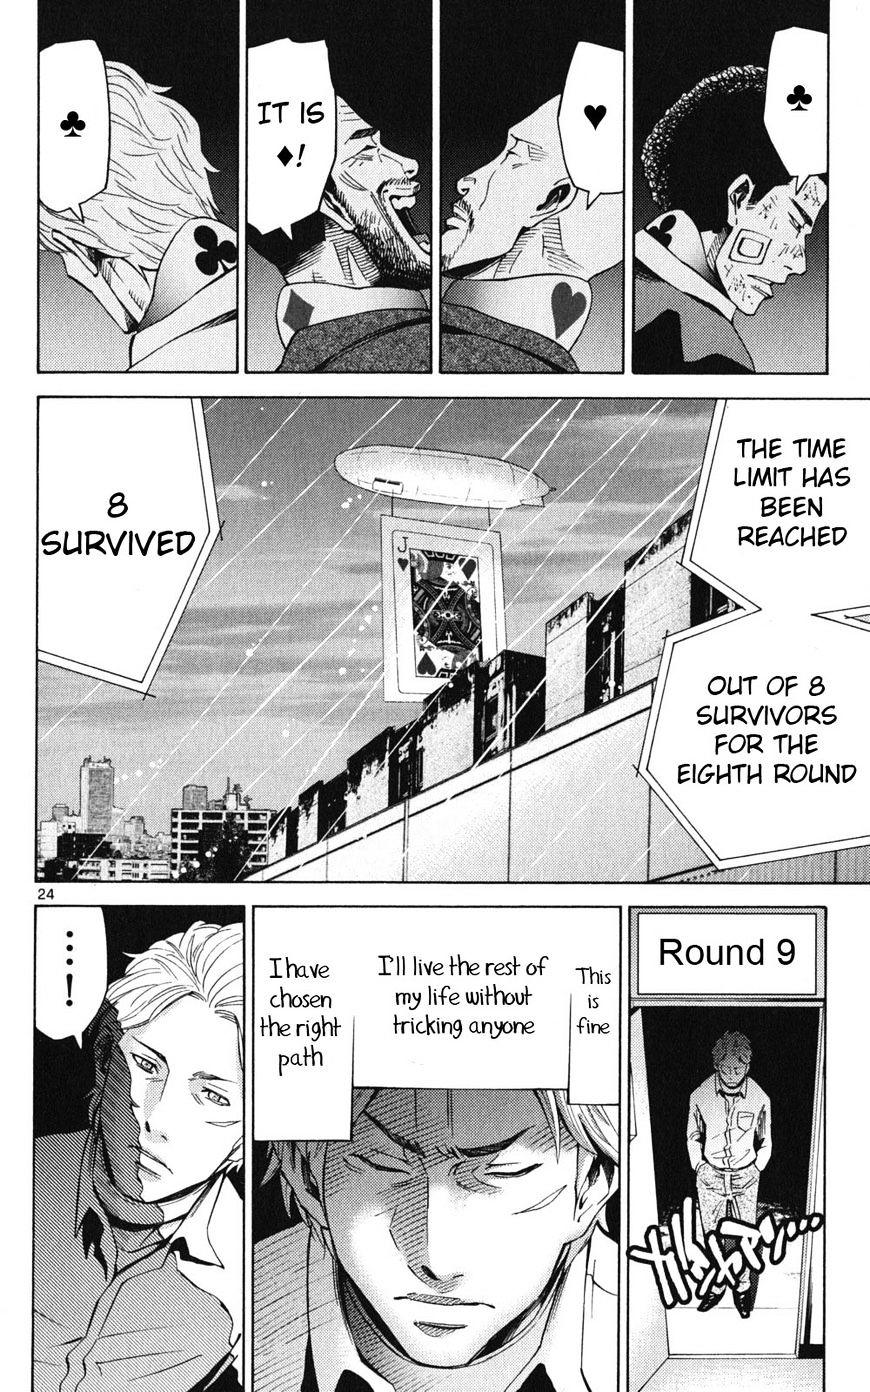 Imawa No Kuni No Alice Chapter 47 : Jack Of Hearts (3) page 26 - Mangakakalot